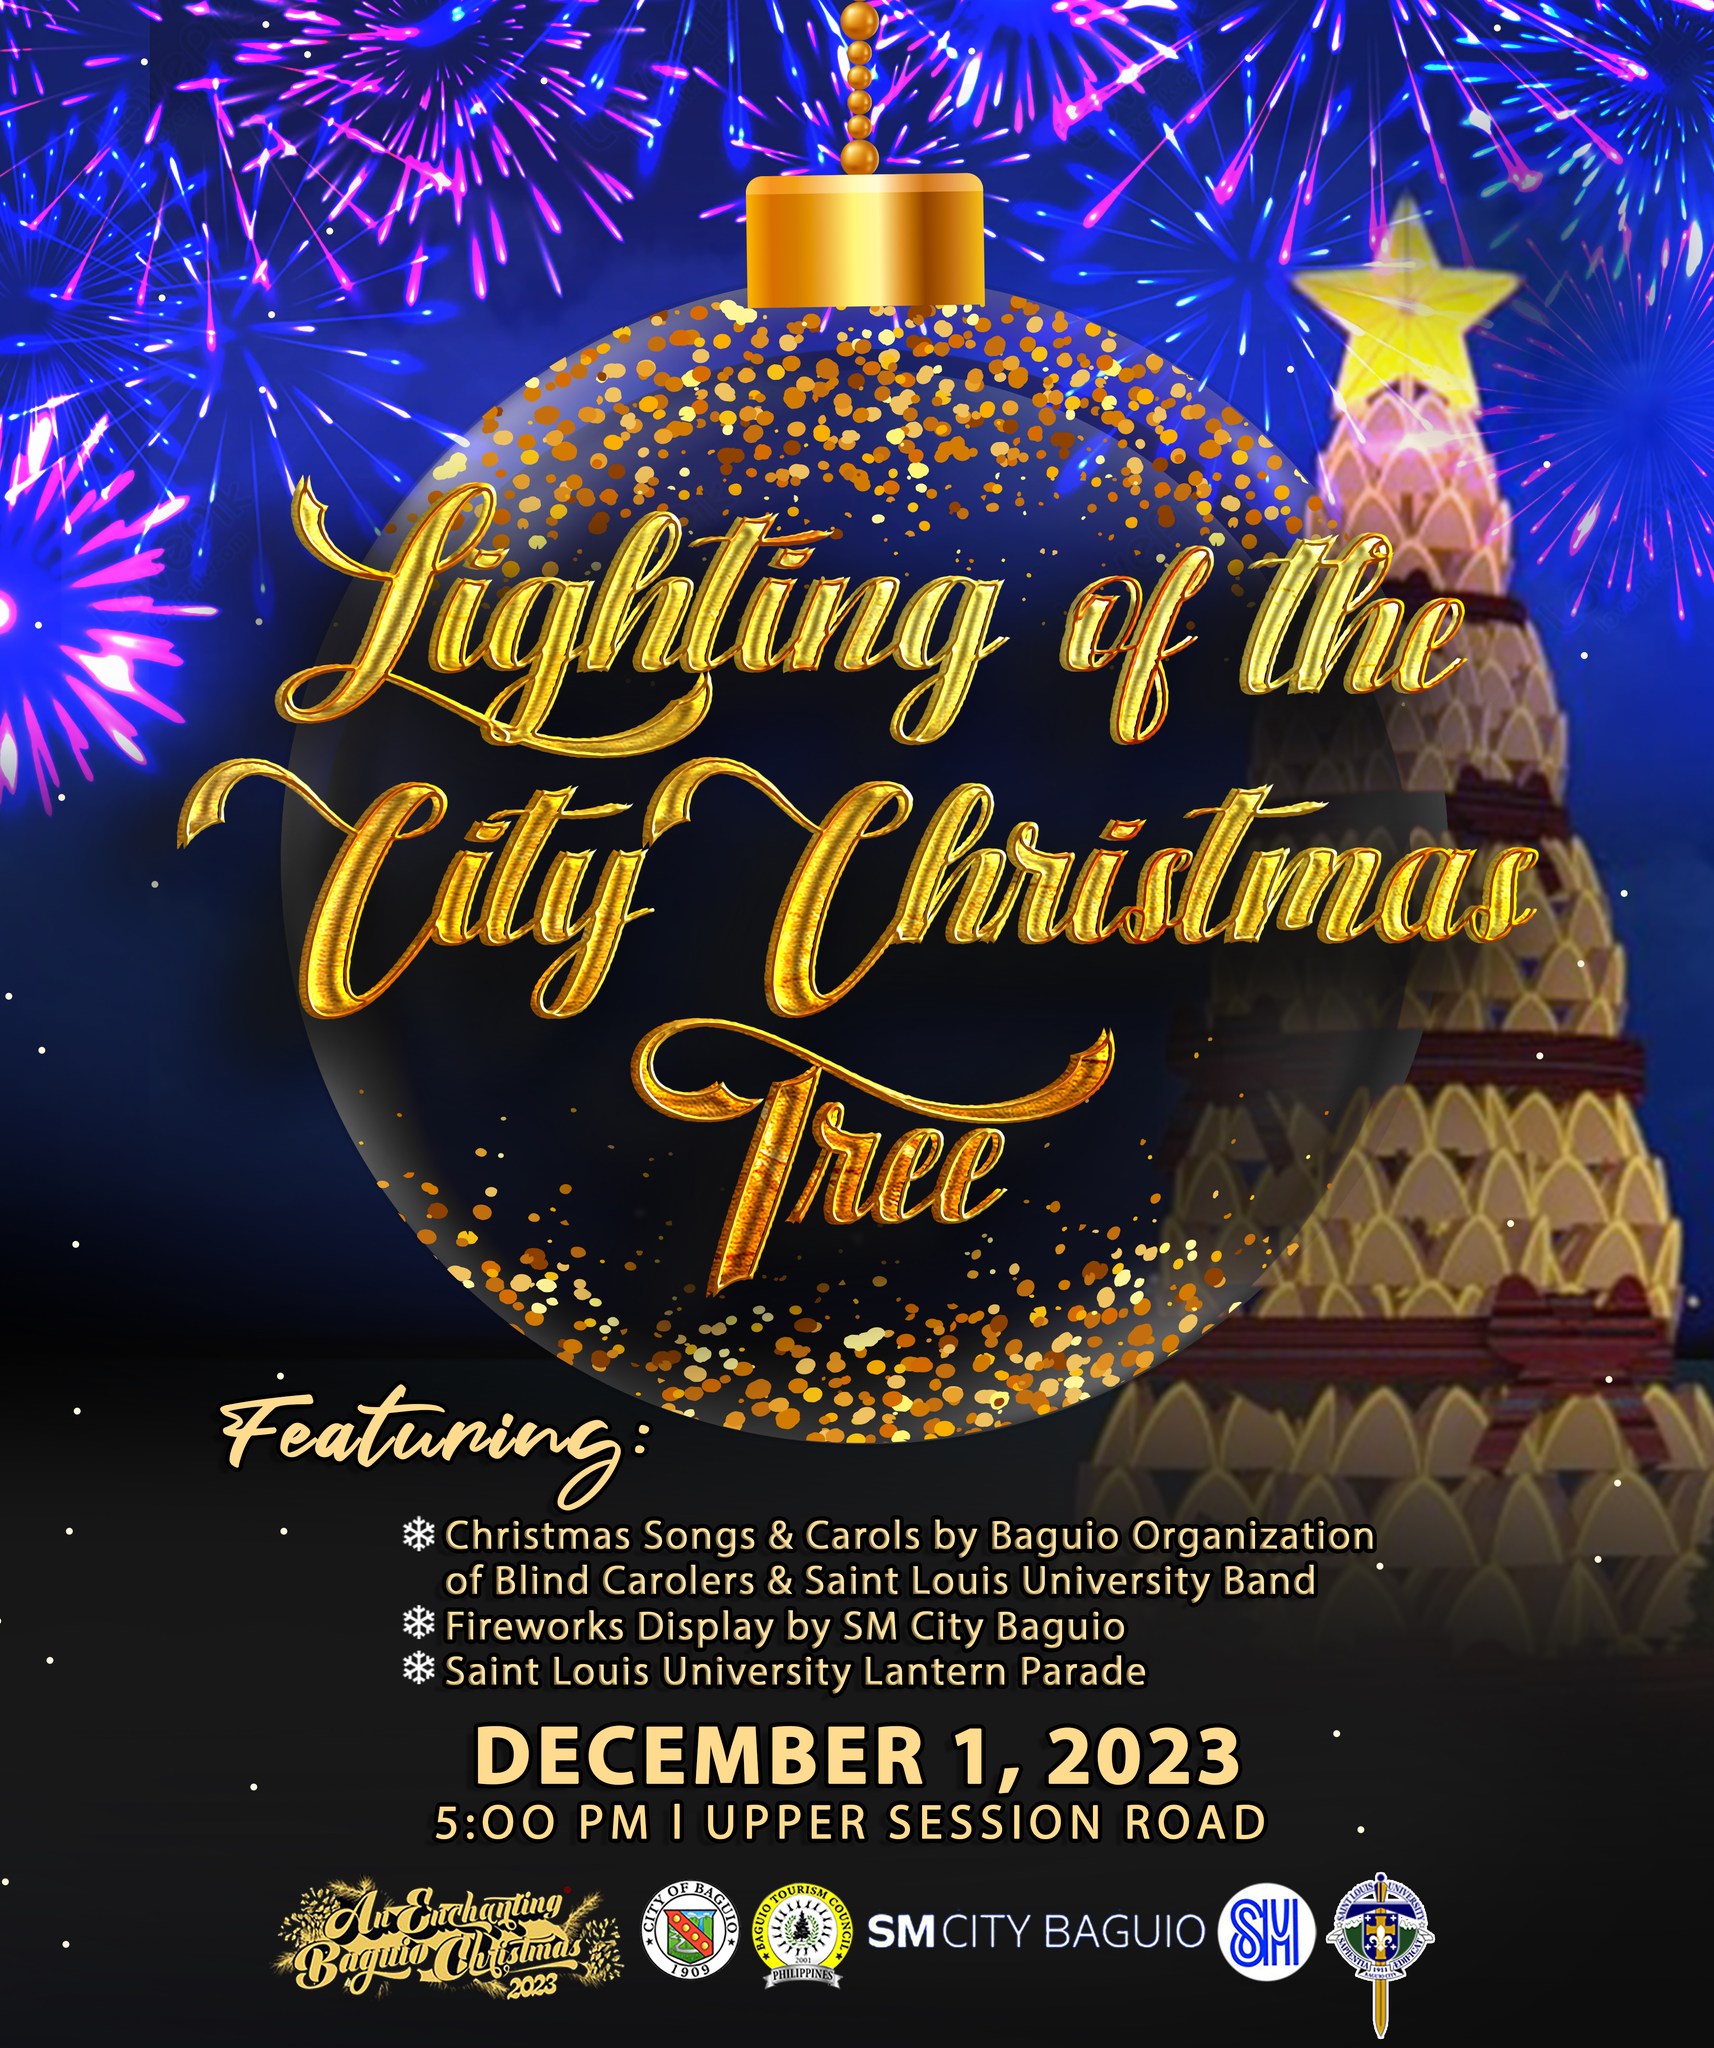 Symbolic Lighting of the City Christmas Tree